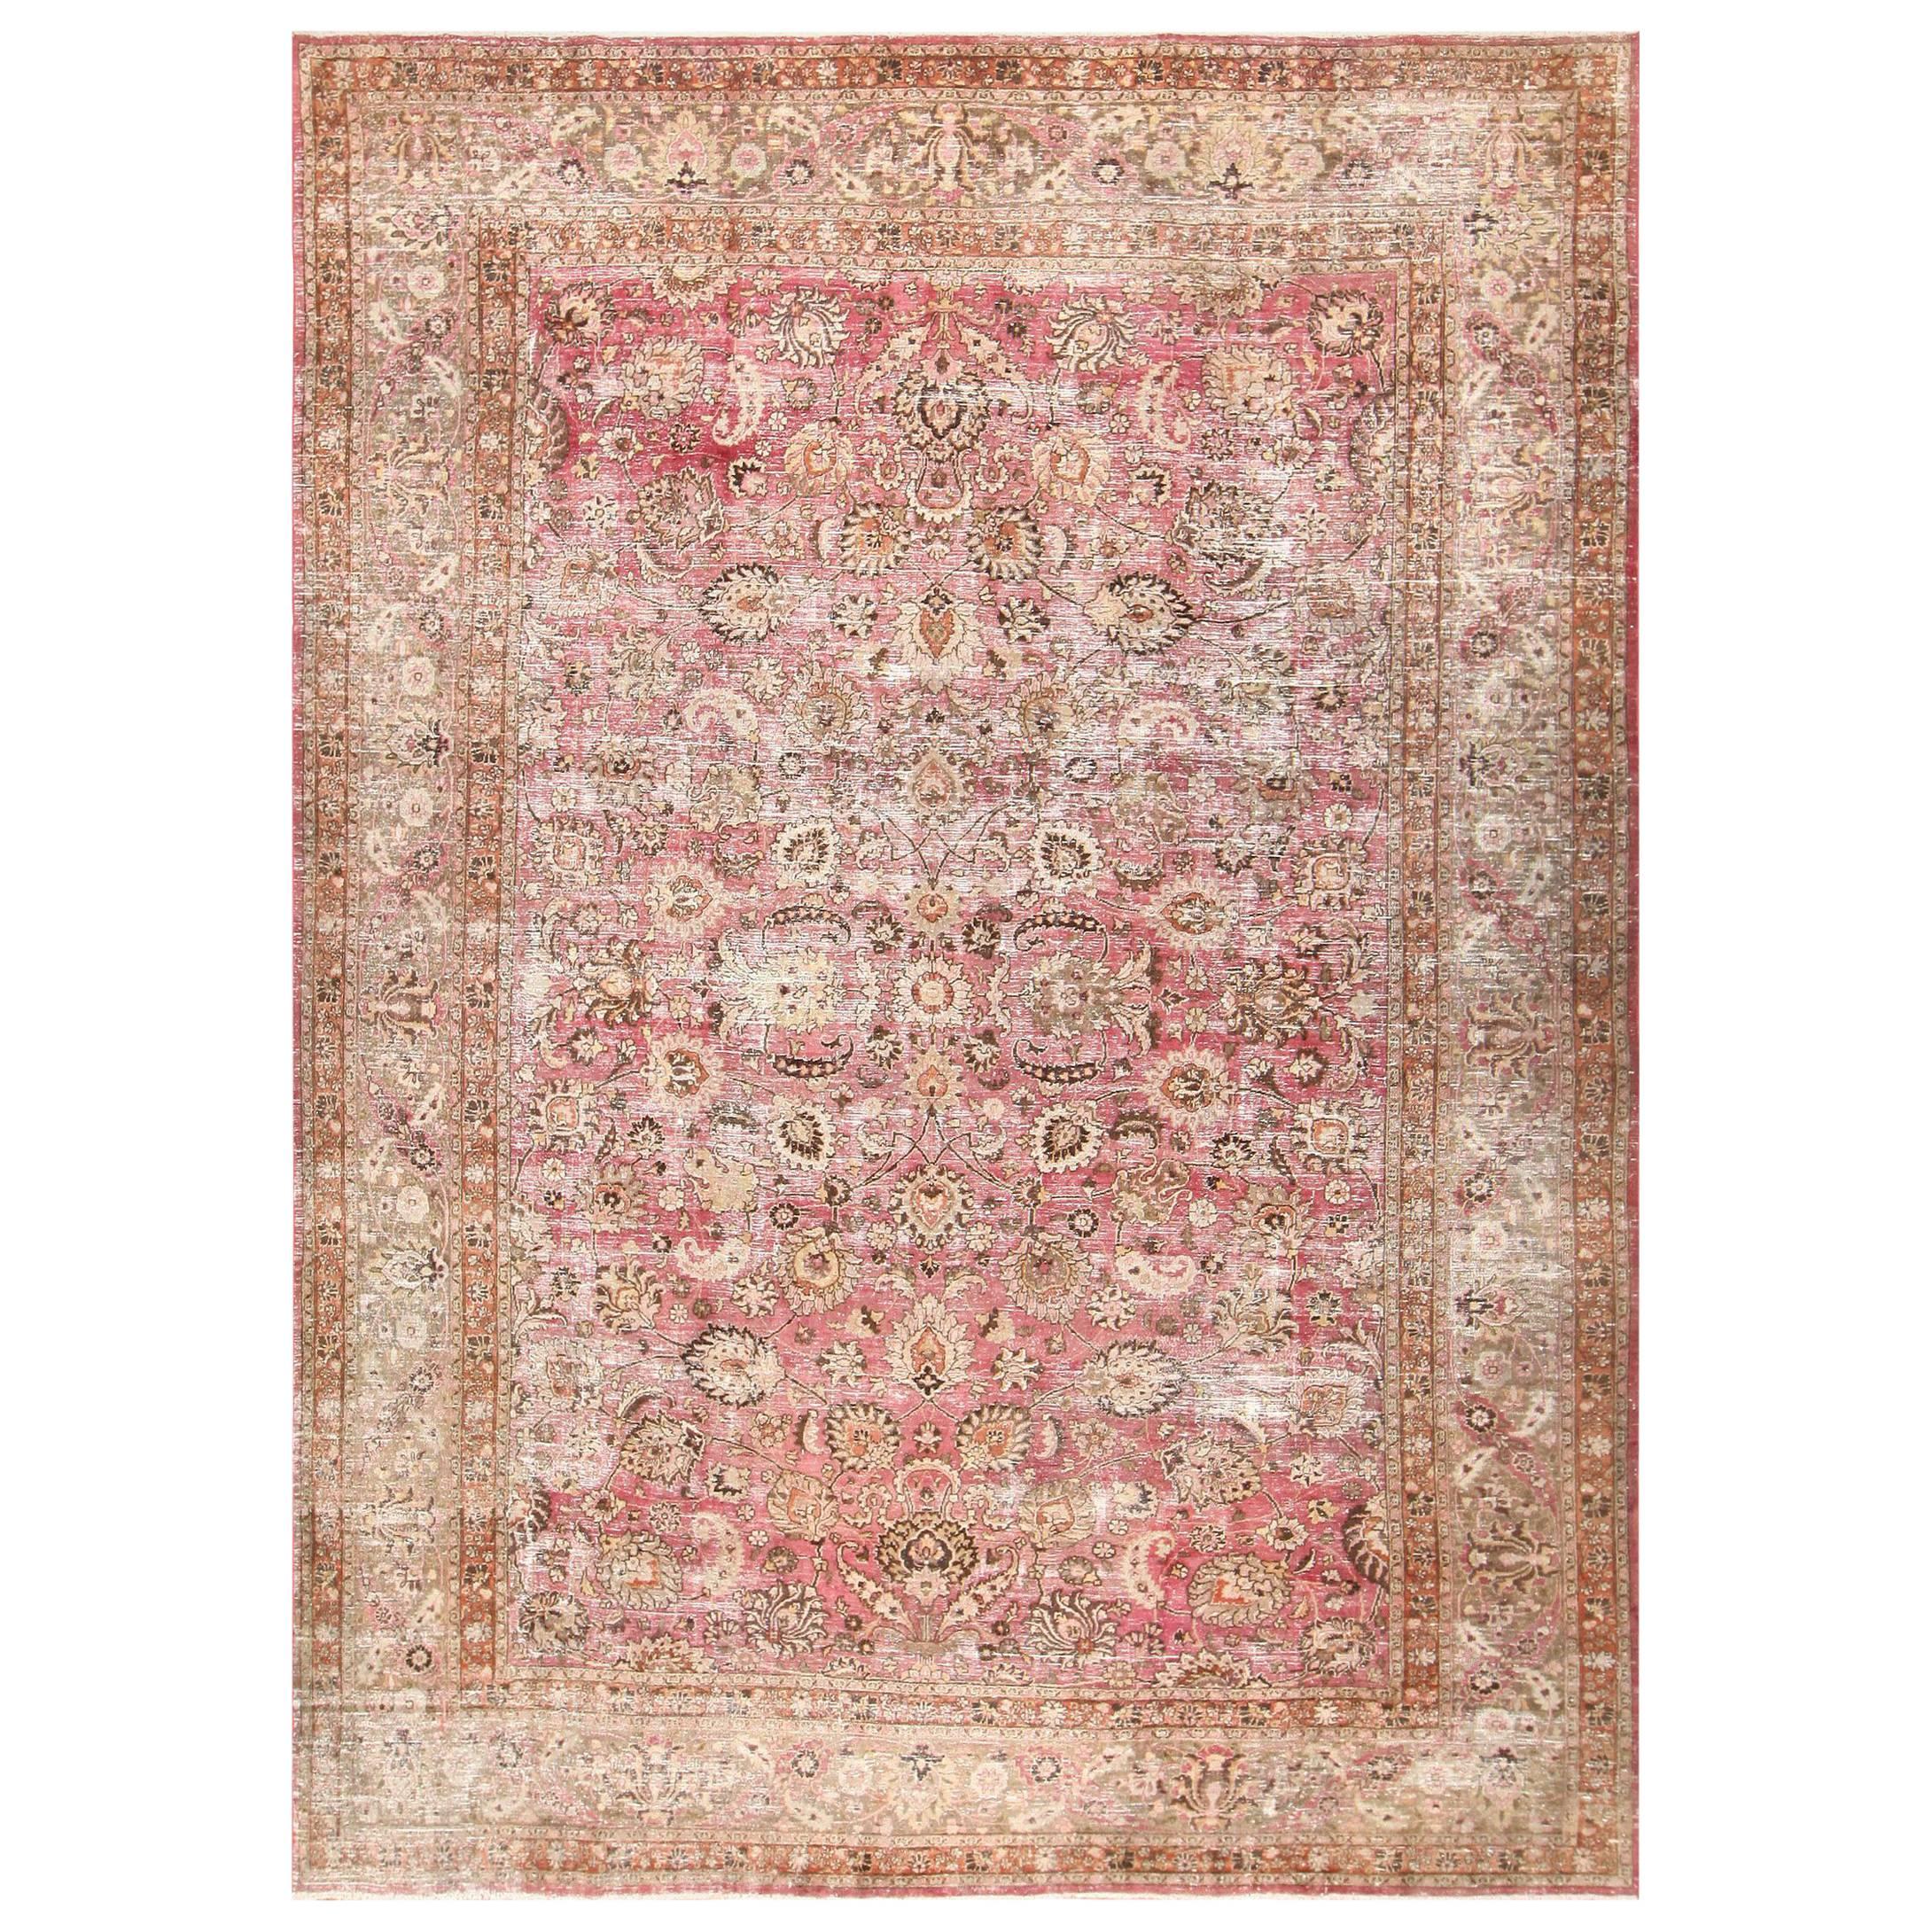 Antique Shabby Chic Persian Khorassan Carpet